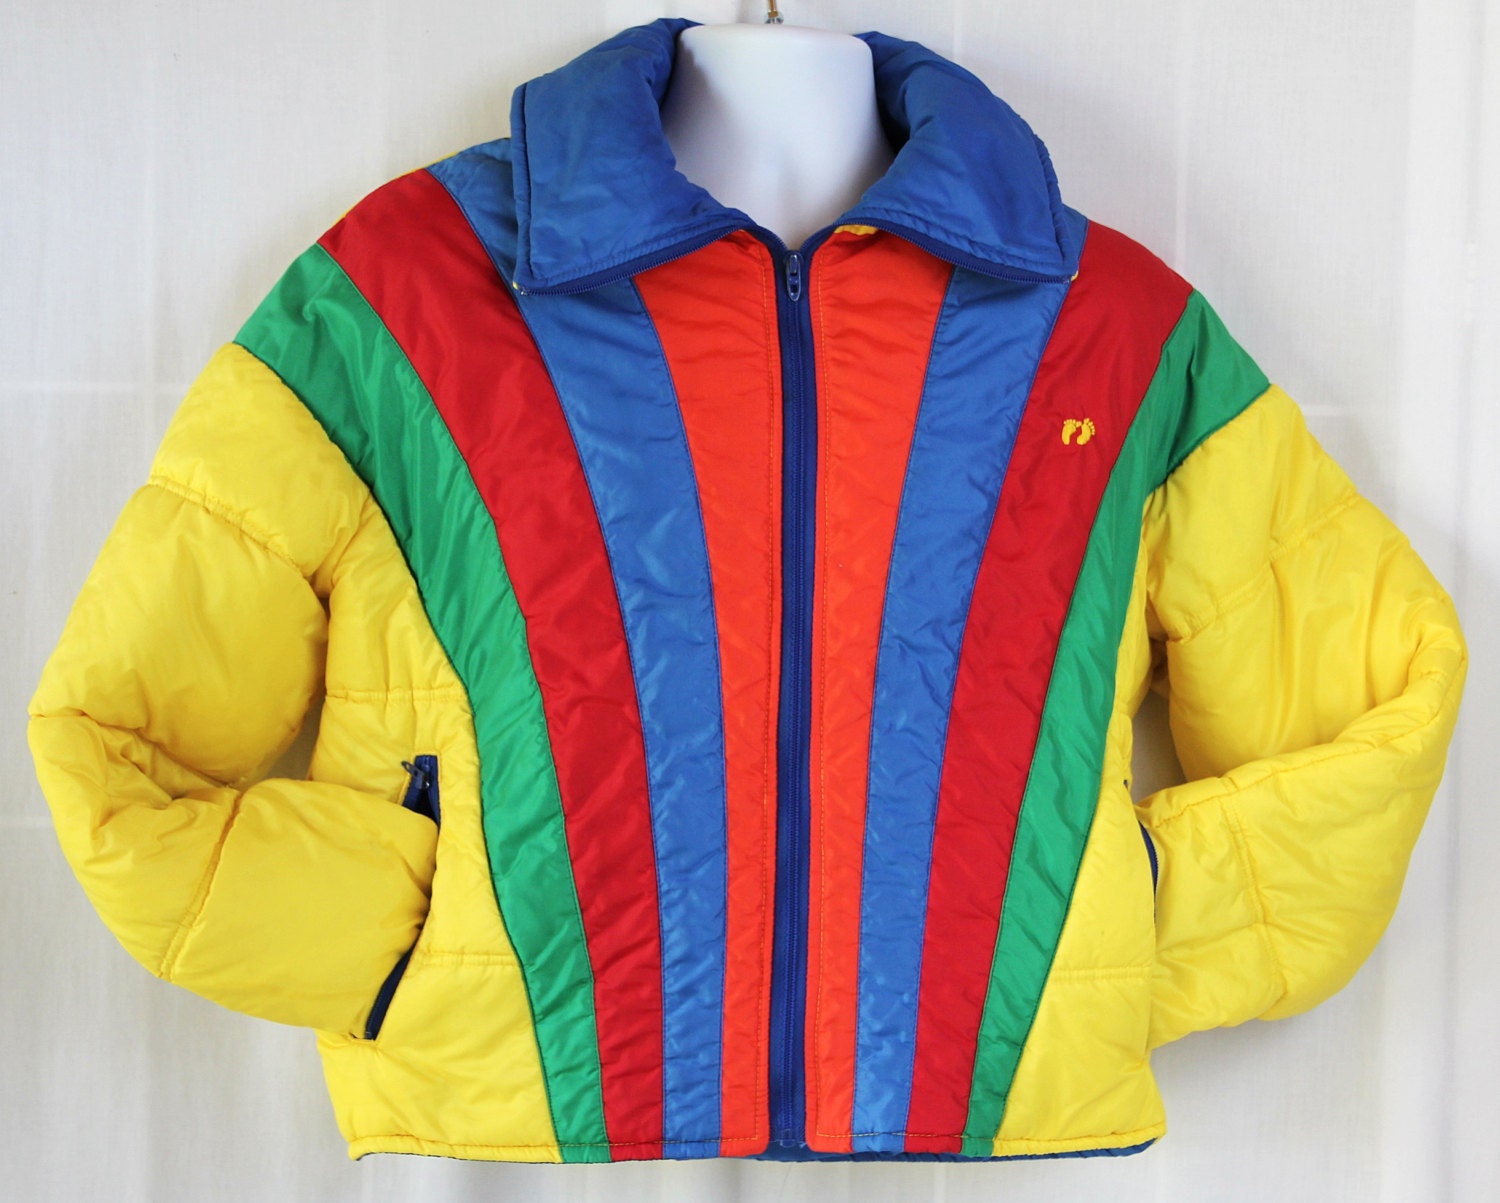 70s Jacket / Rainbow / Hang Ten / Ski Jacket / Bubble Jacket / Fall Fashion / Unisex - PetticoatsPlus